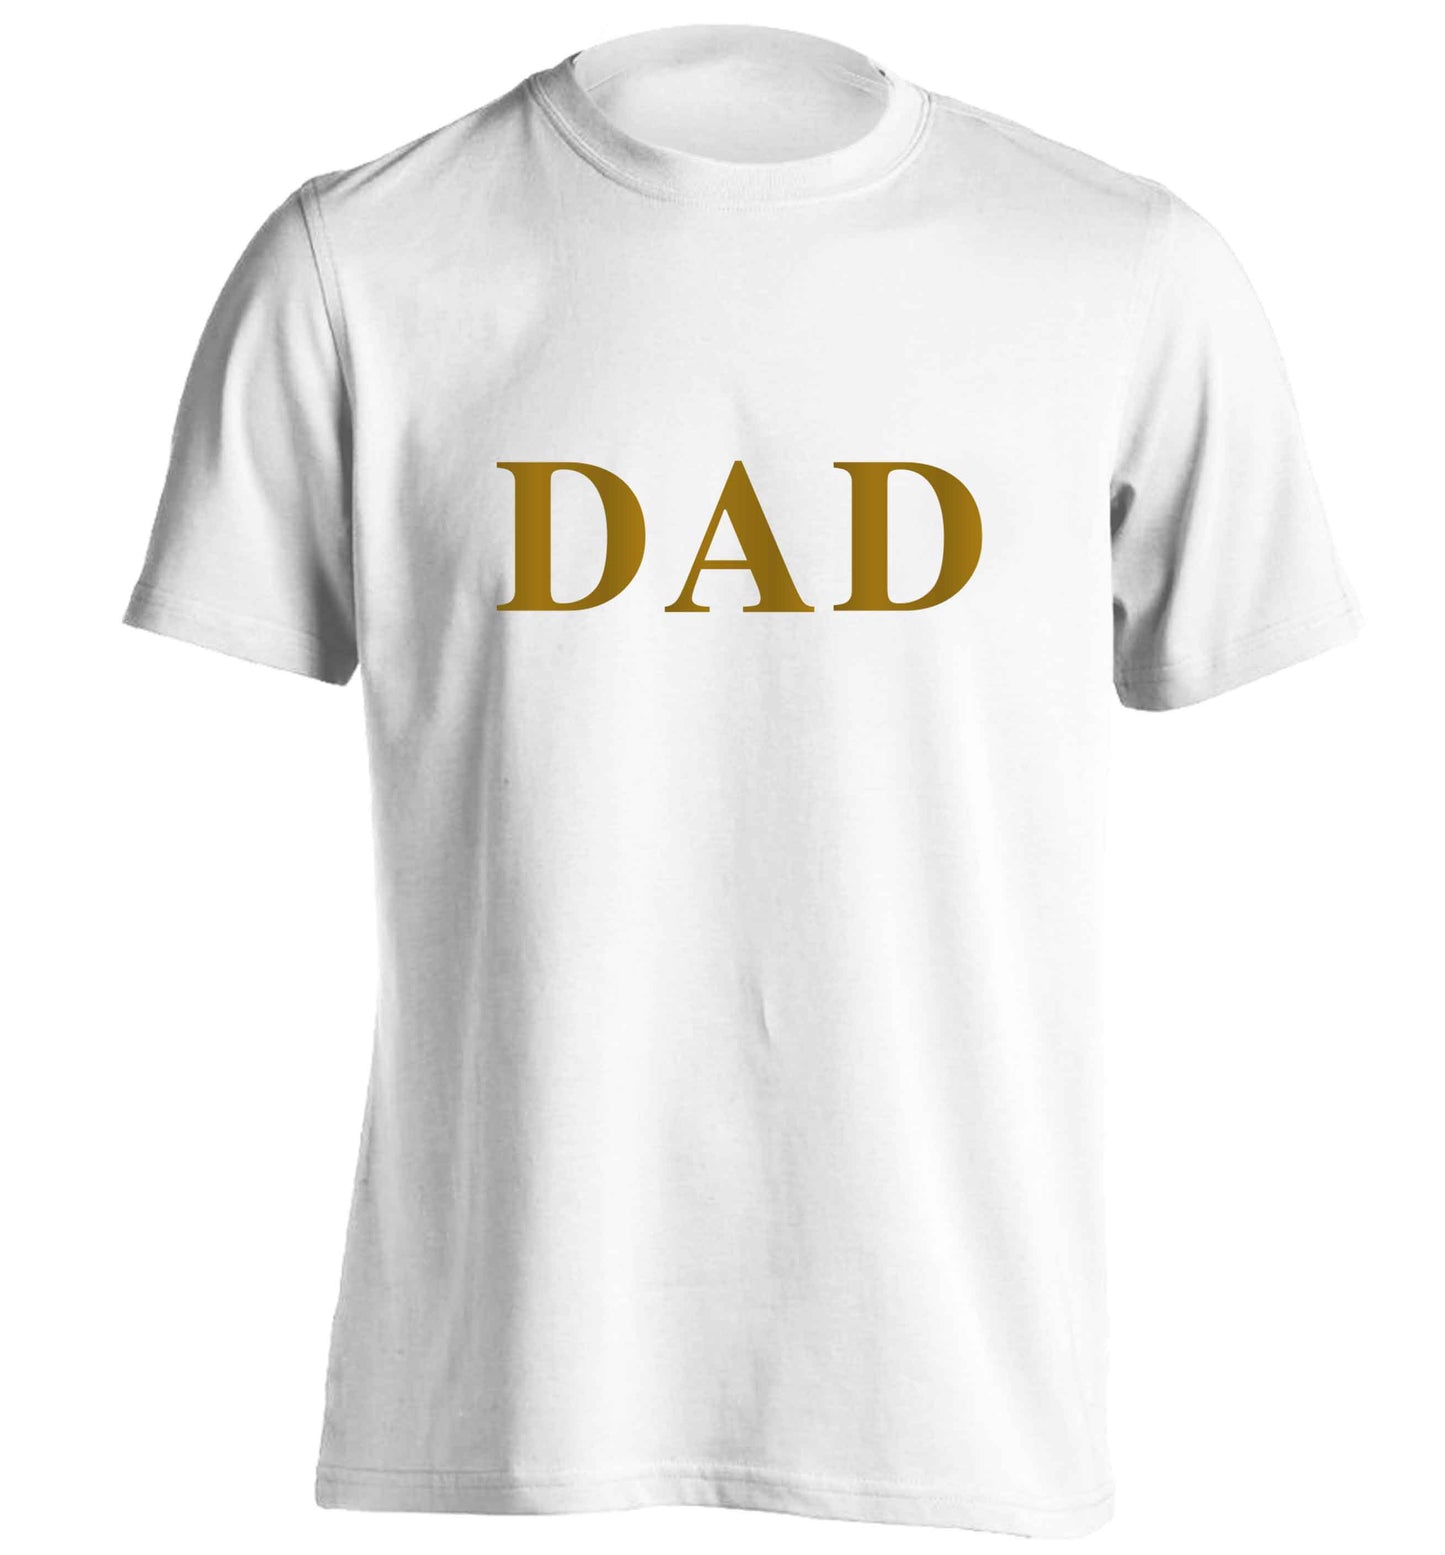 Dad adults unisex white Tshirt 2XL